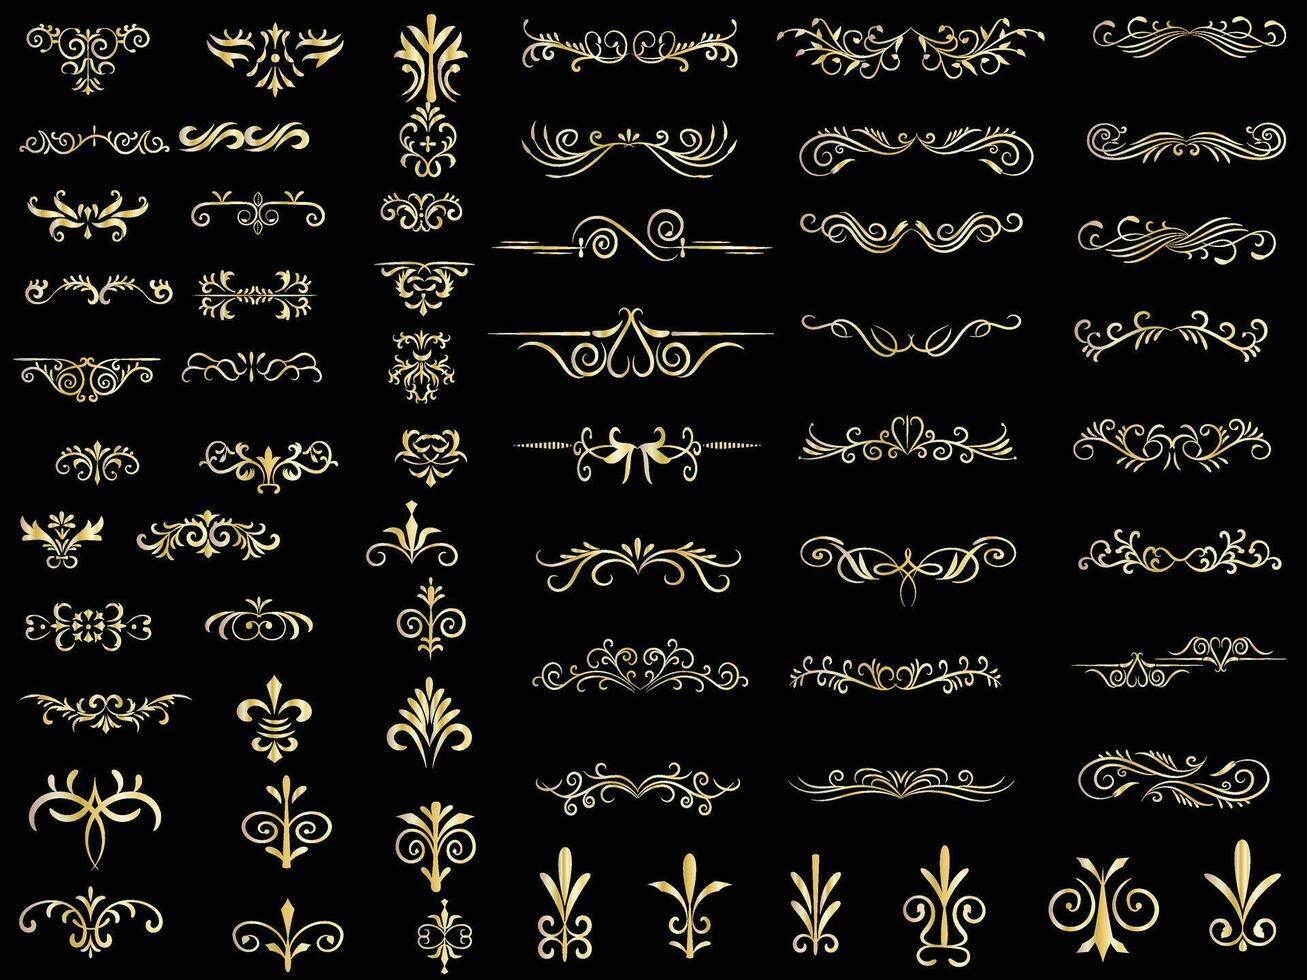 Golden vintage floral elements art deco style decorative border frames and dividers. vector